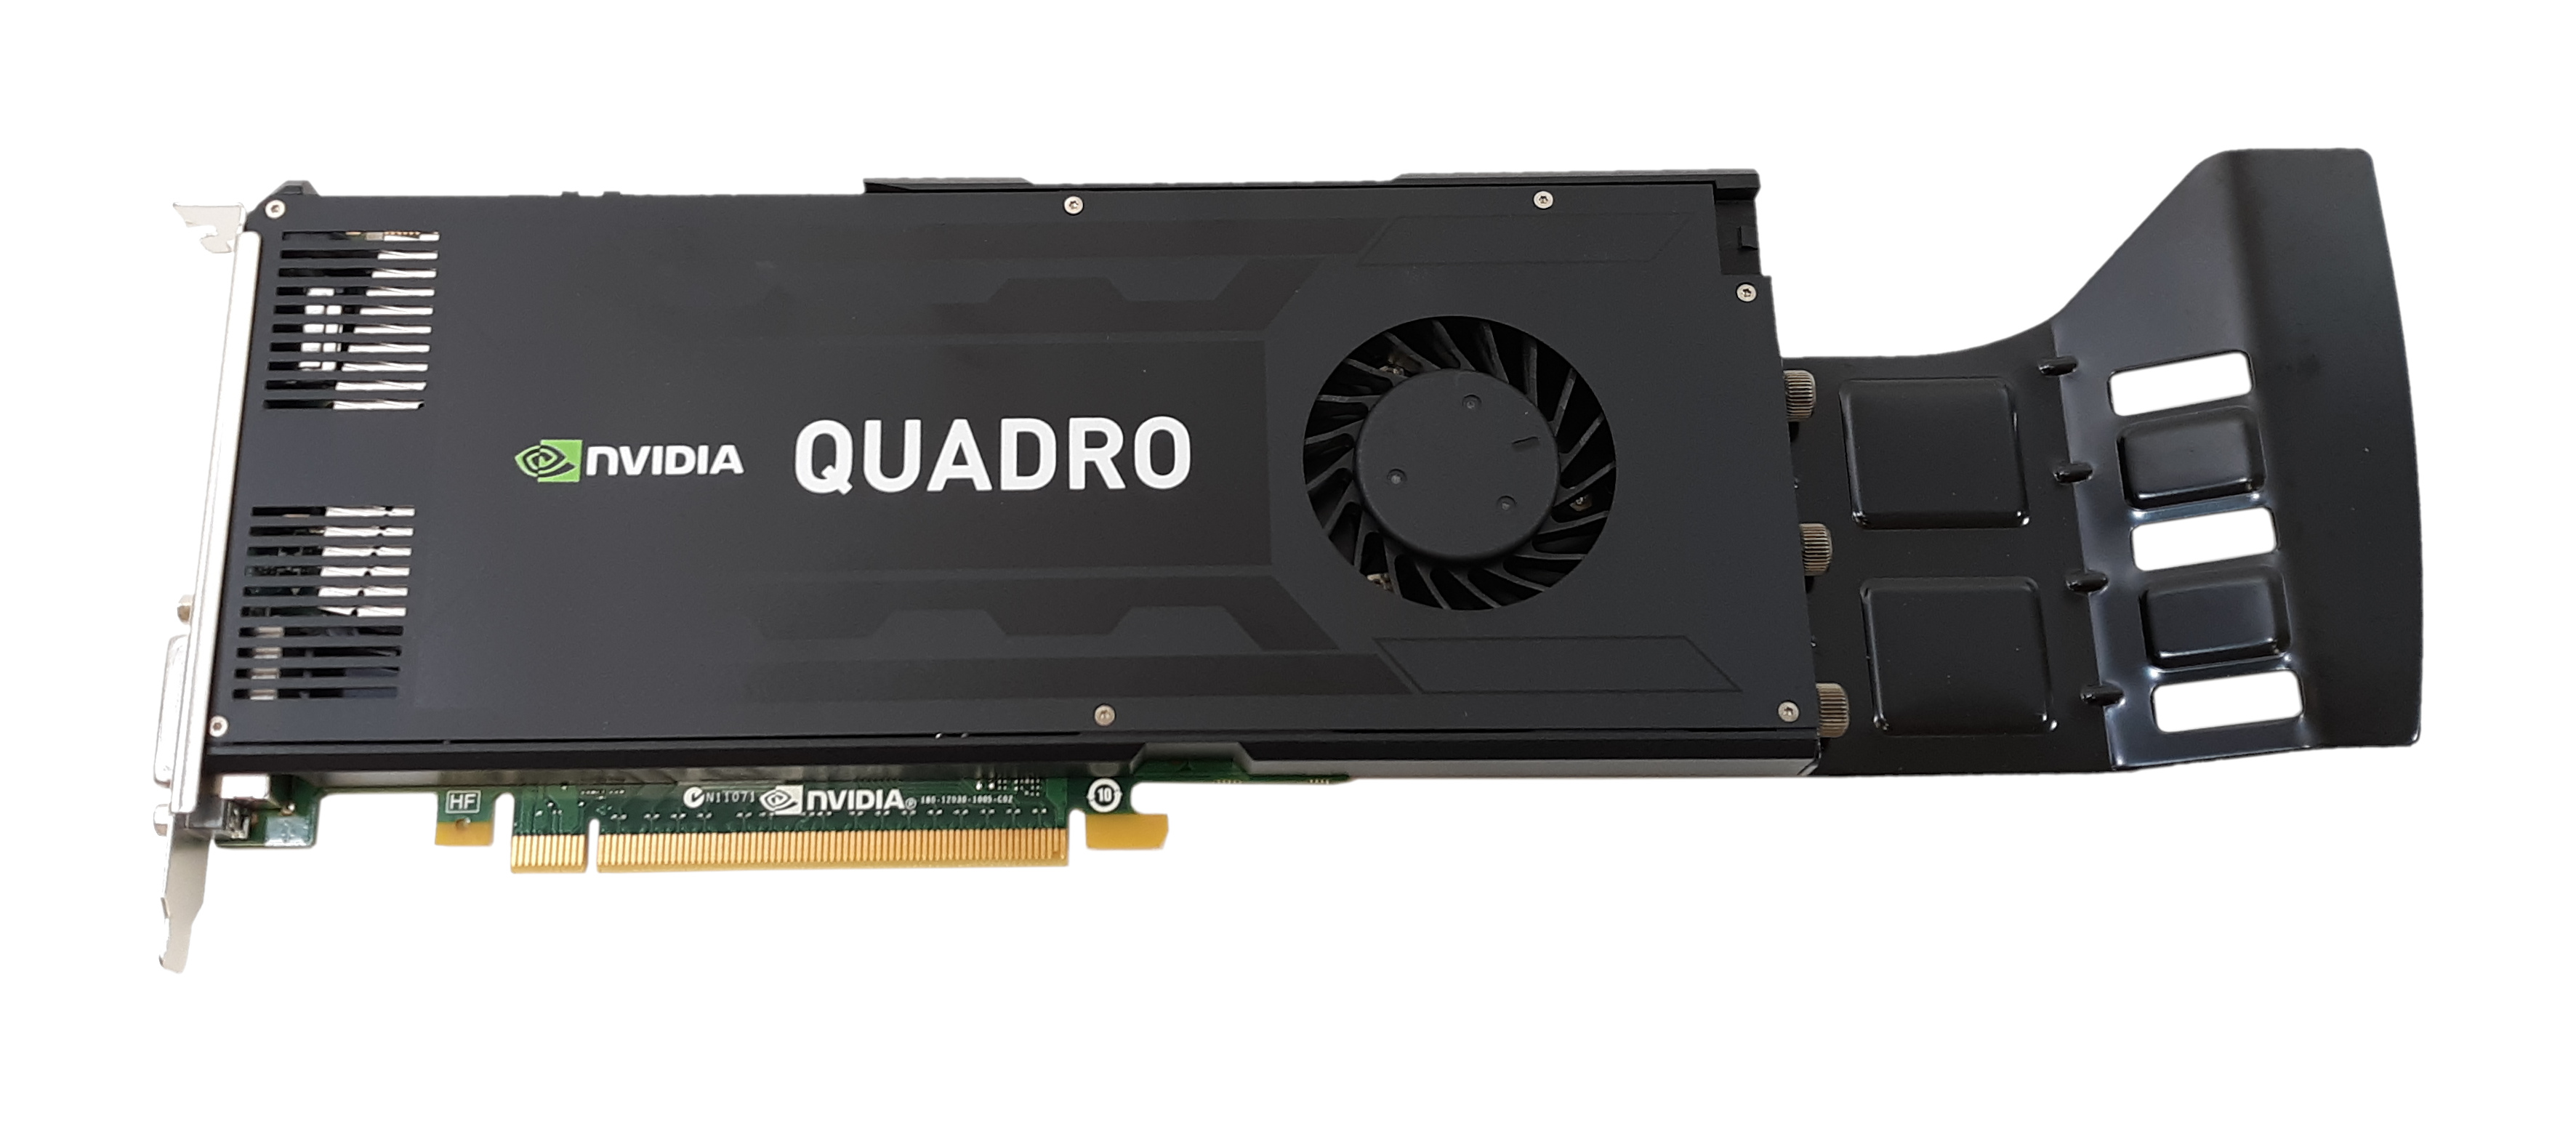 HP nVIDIA Quadro K4000 GPU 3GB PCIE x16 2xDP/DVI 700104-001 713381-001 C2J94AA - Click Image to Close